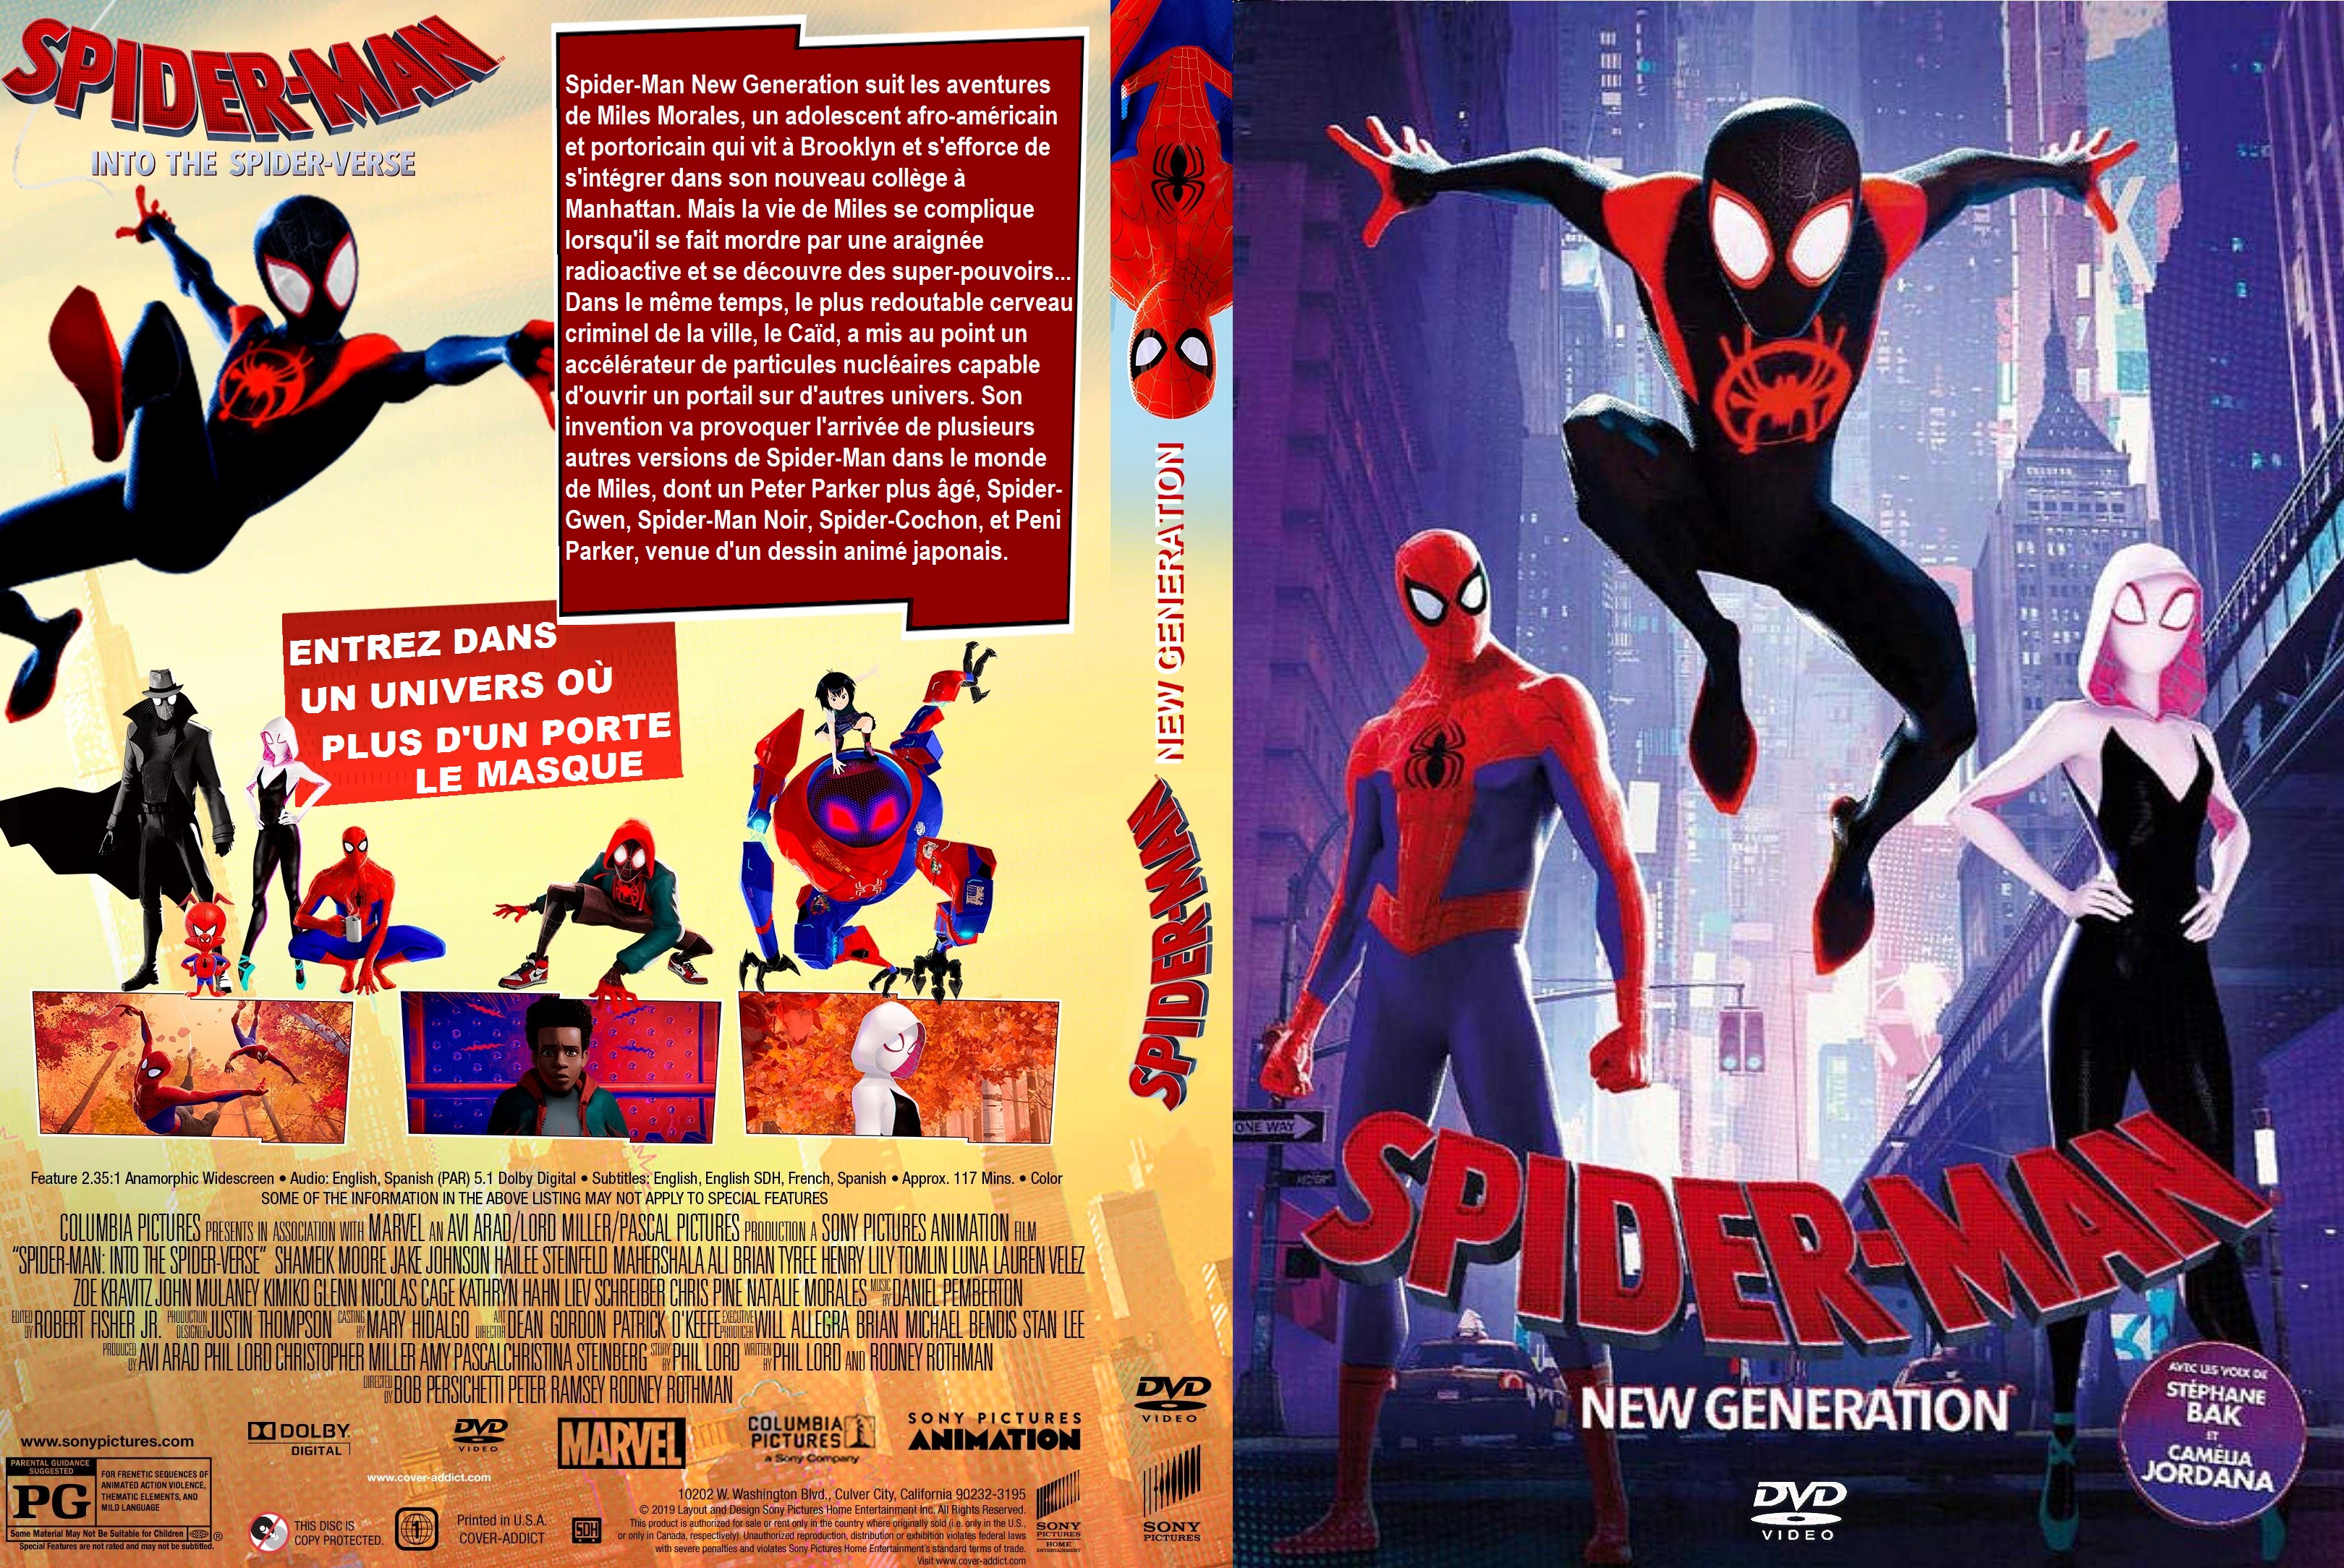 Jaquette DVD Spider-Man New Generation custom